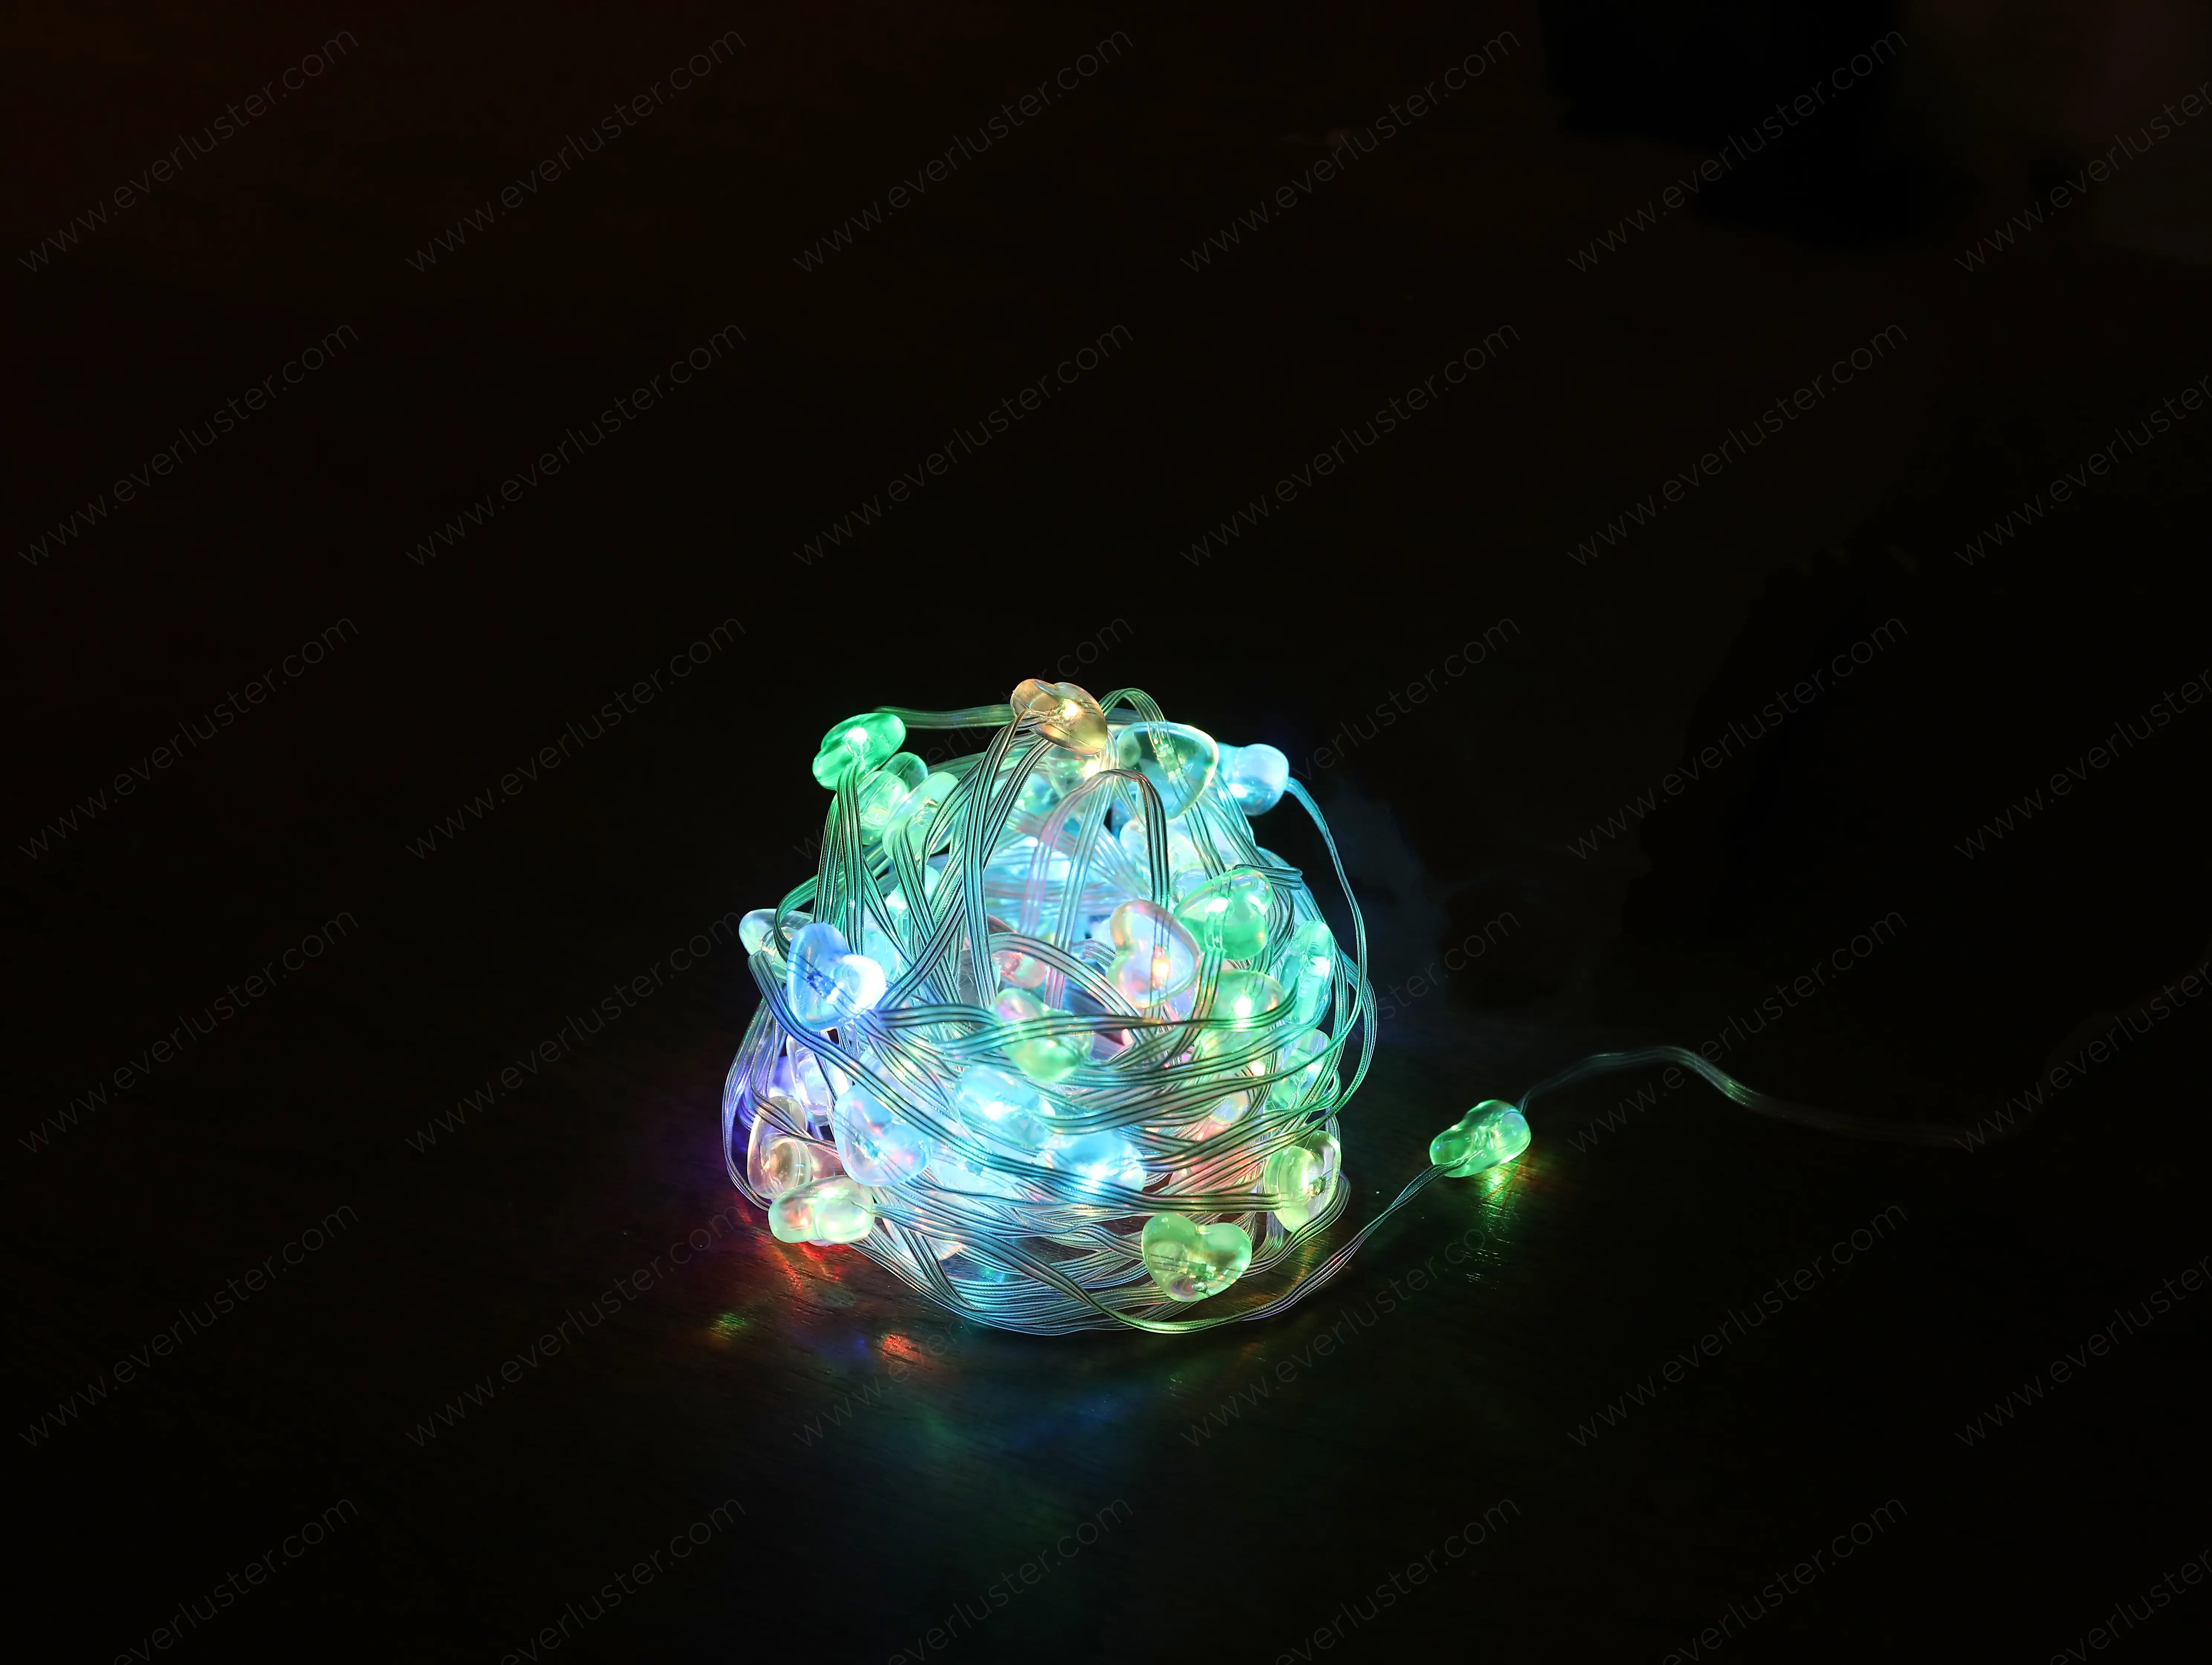 Newest Christmas string light fasion-Heart symbol